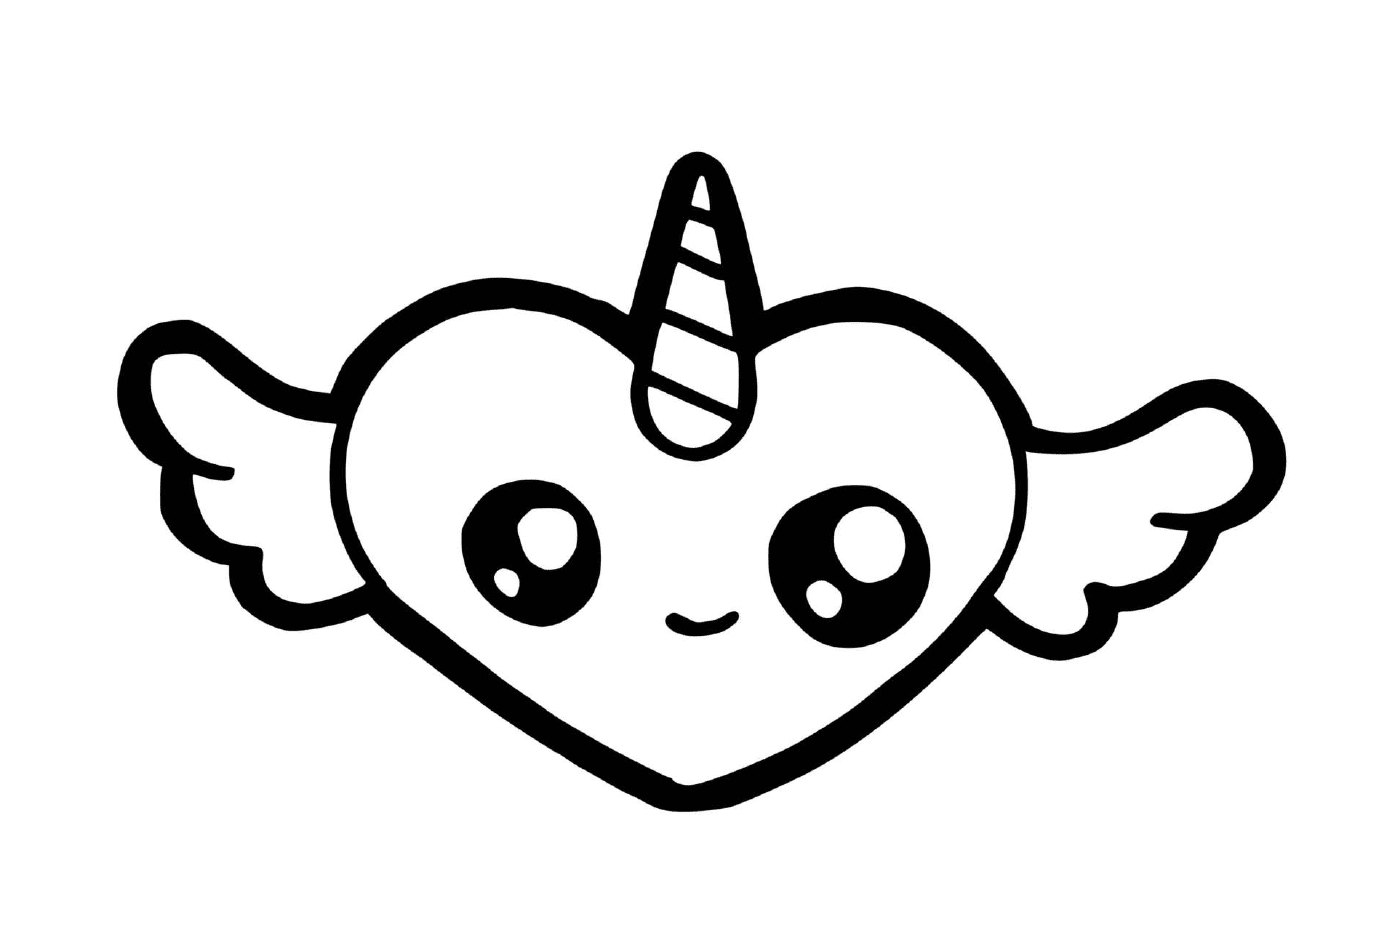  Corazón de unicornio kawaii alado 